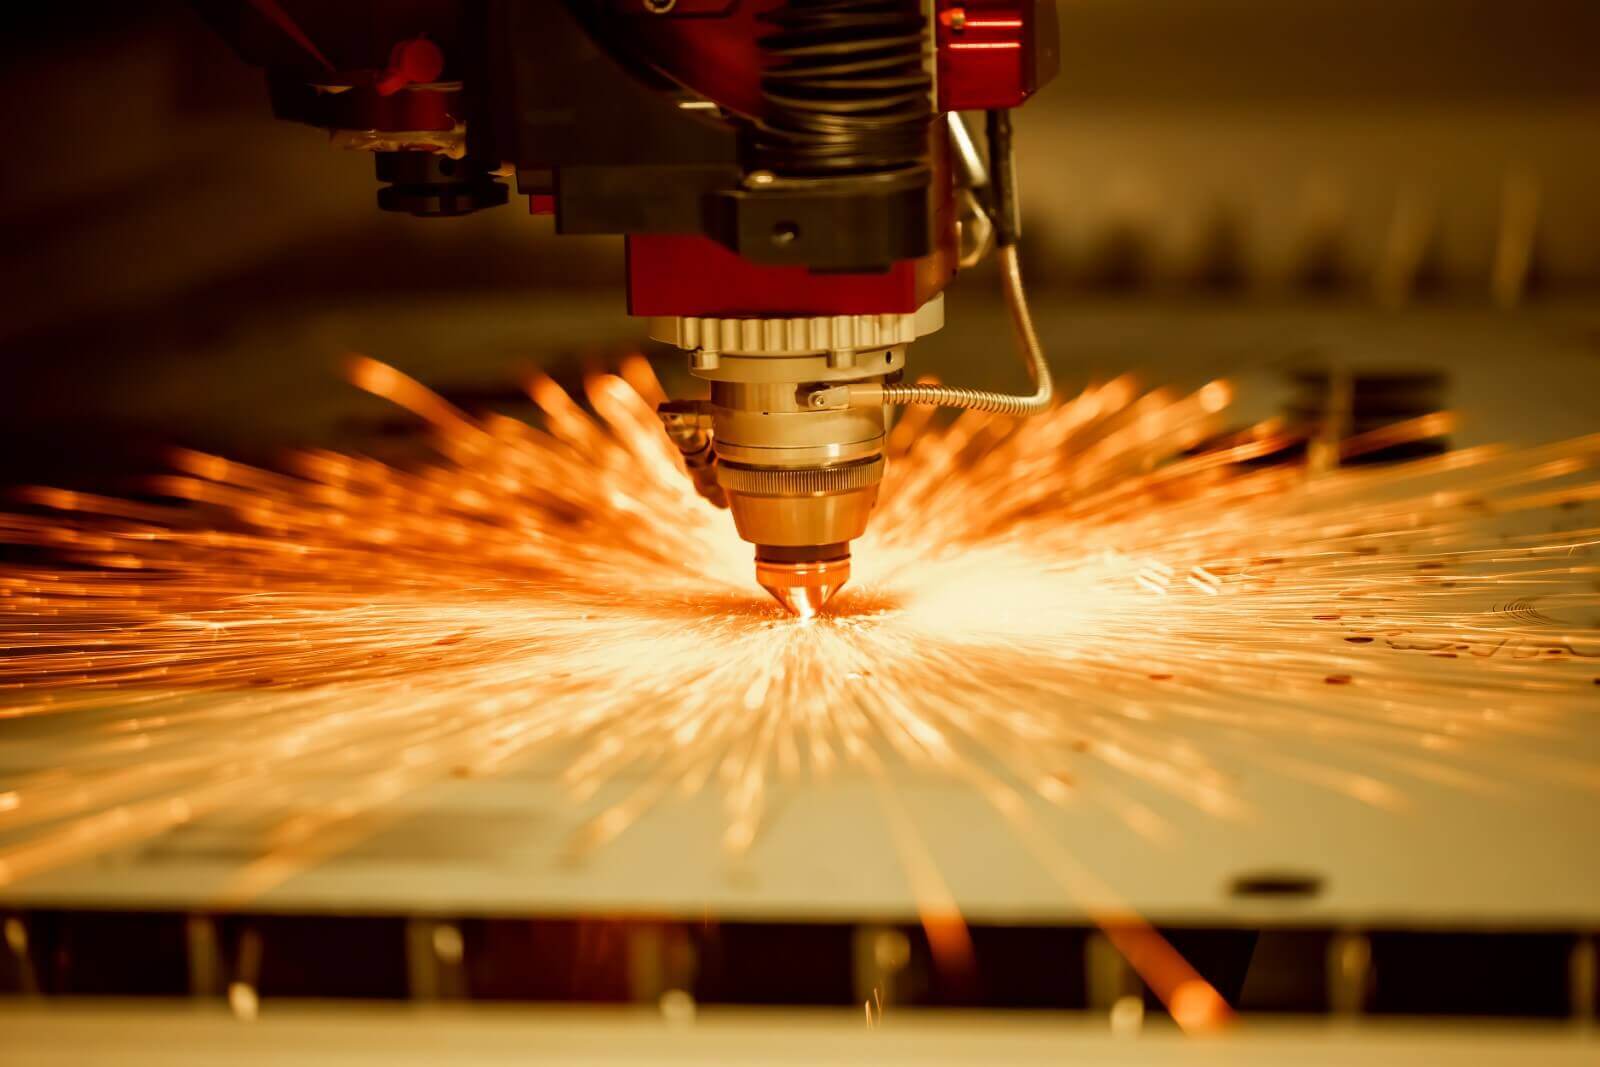 cnc-laser-cutting-of-metal-modern-industrial-tech-2023-11-27-05-03-55-utc